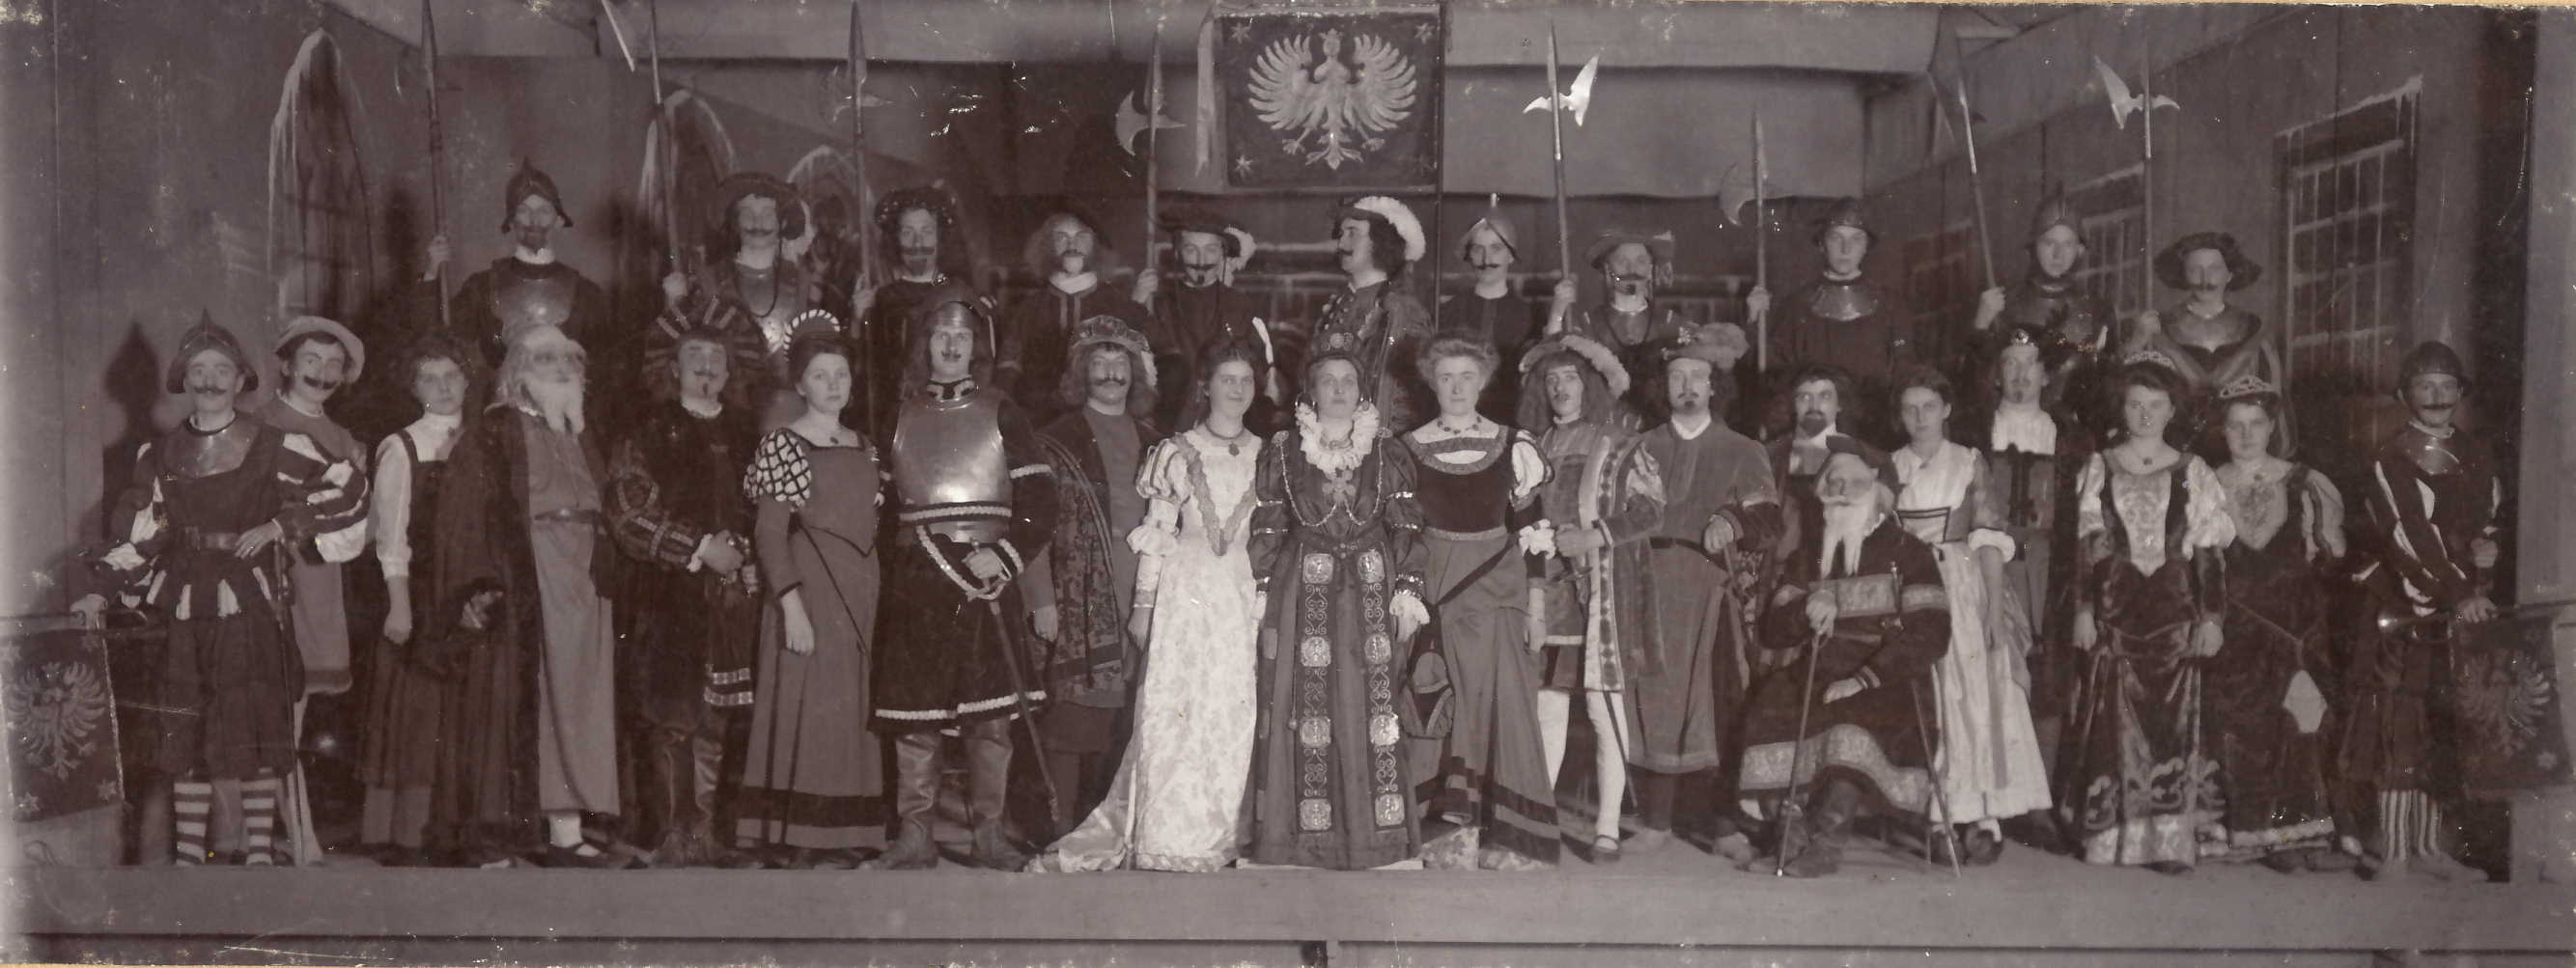 Das Ensemble von 1911